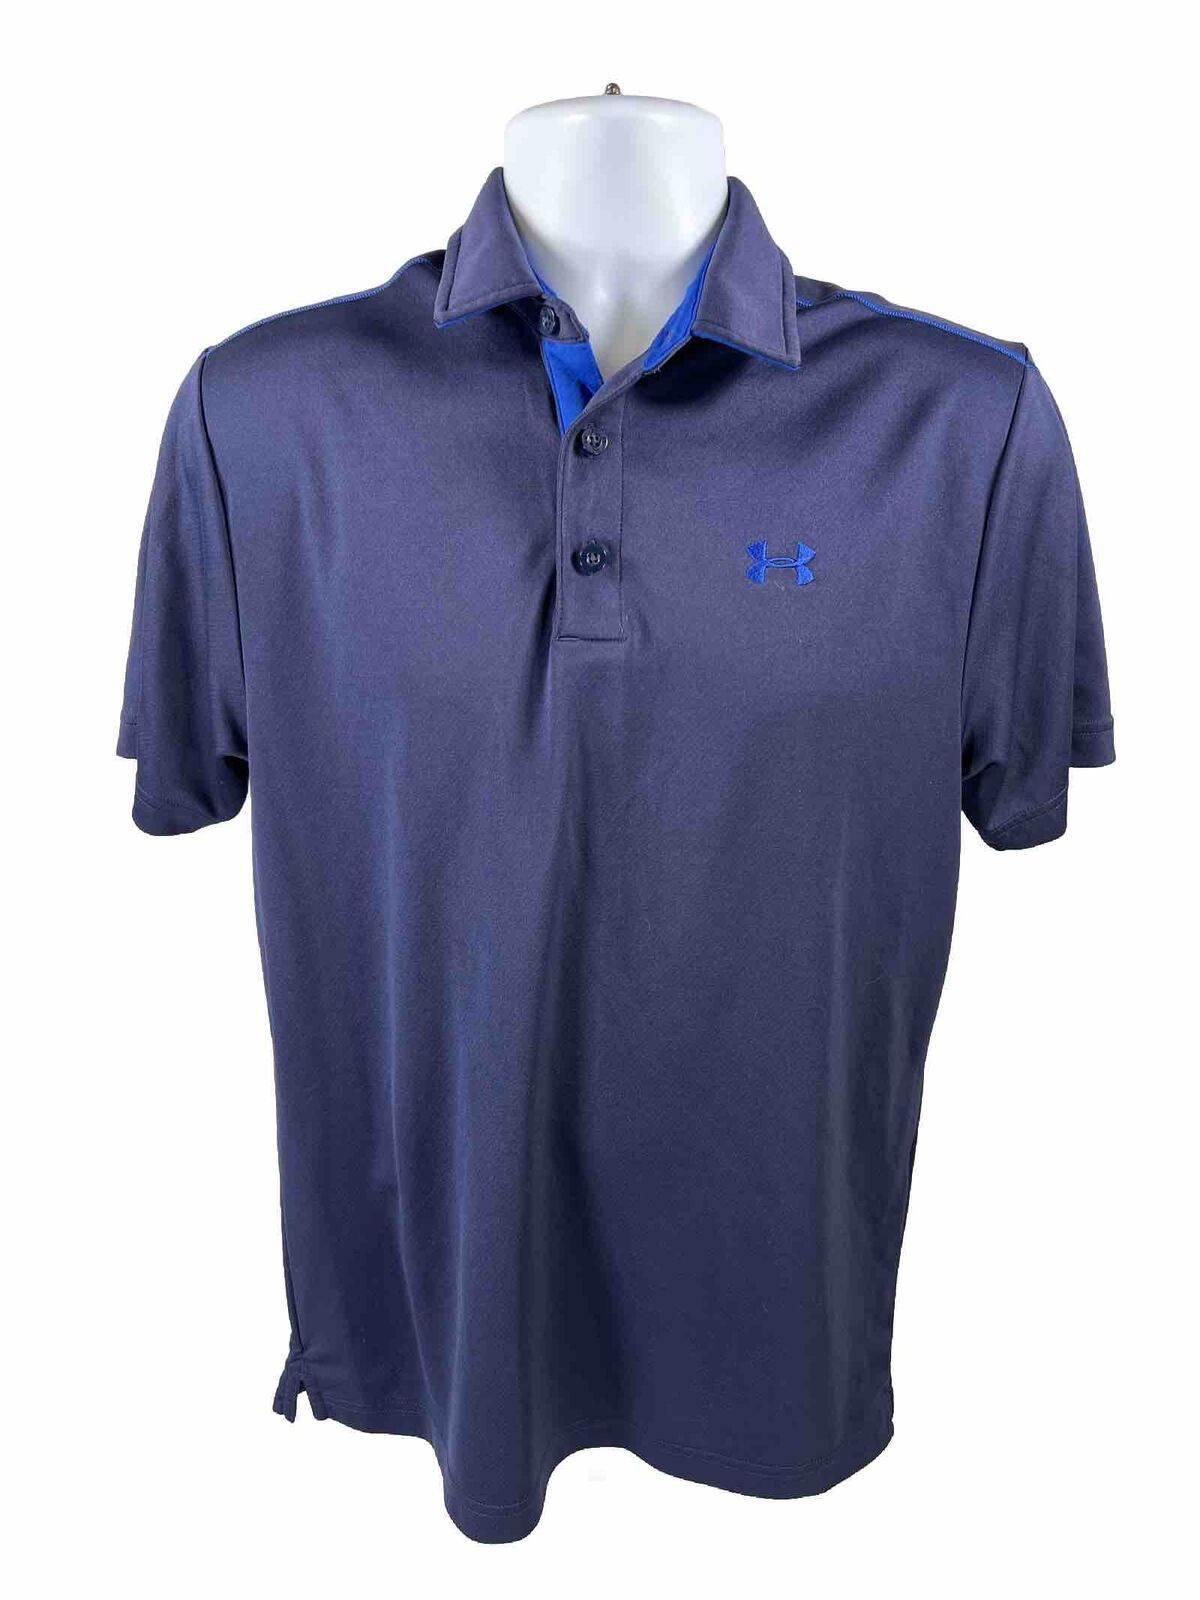 Under Armour Men's Blue Short Sleeve HeatGear Polo Shirt - M